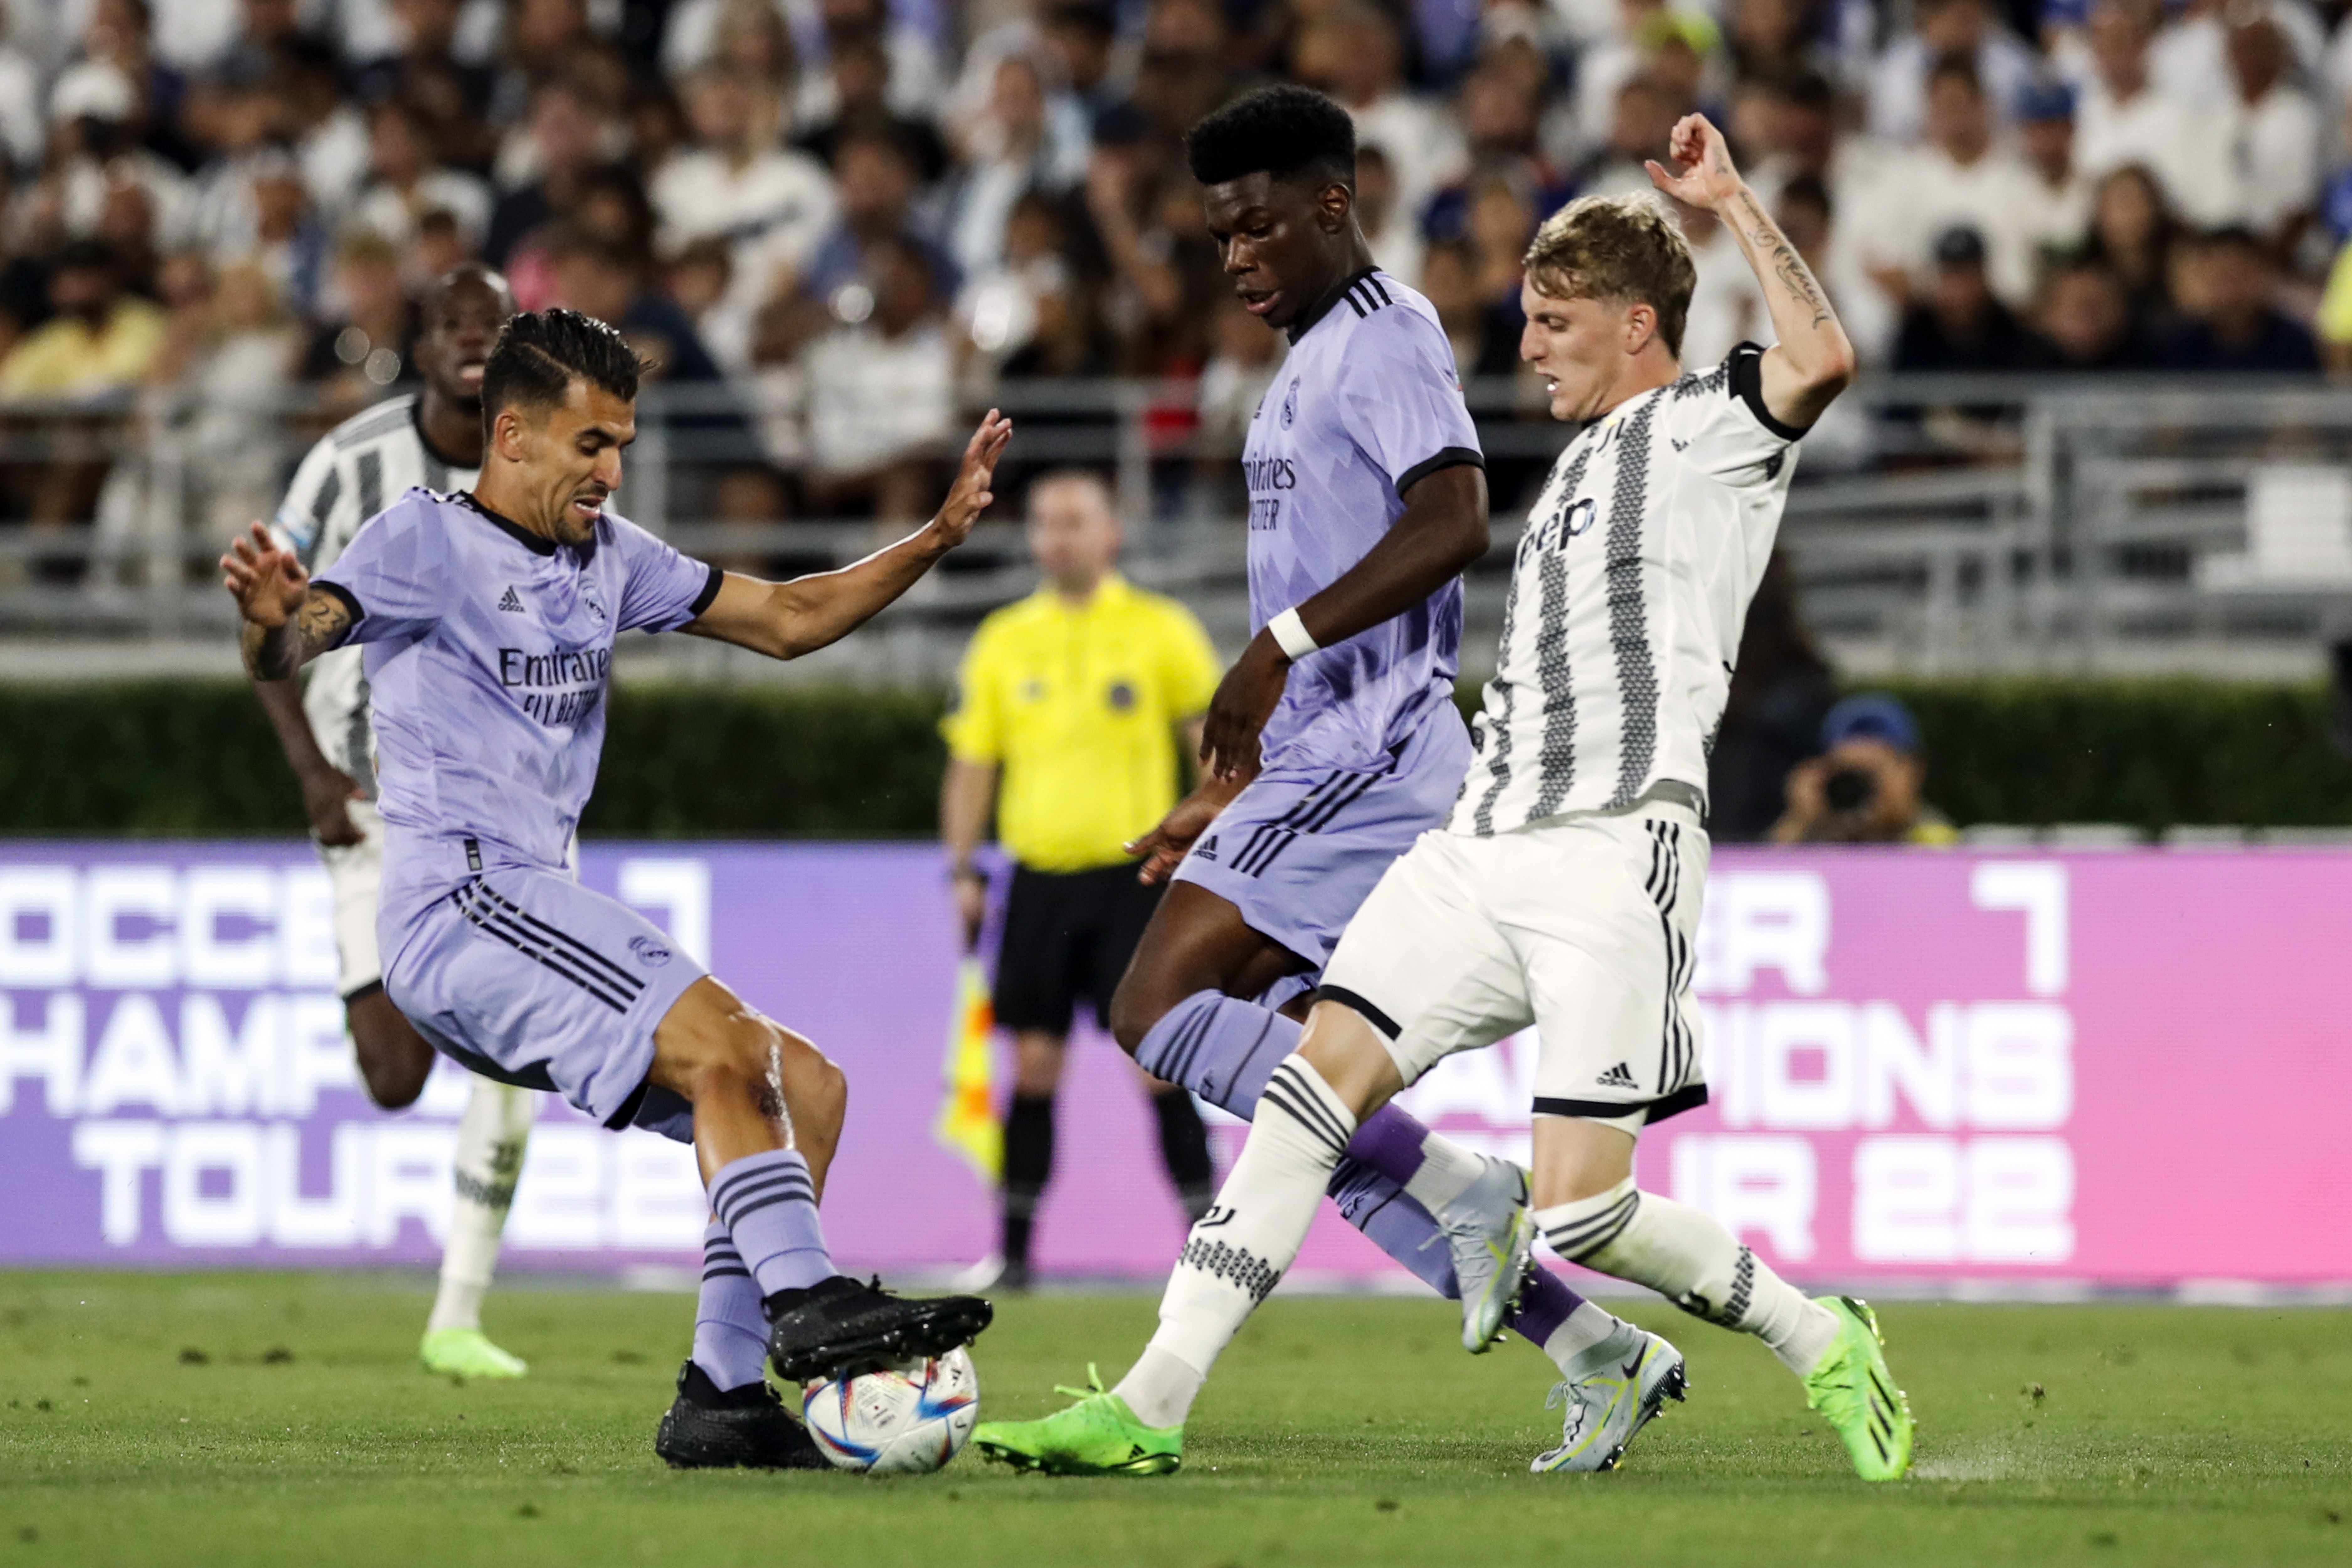 Juventus vs Real Madrid, pre-season 2023 friendly: Watch live